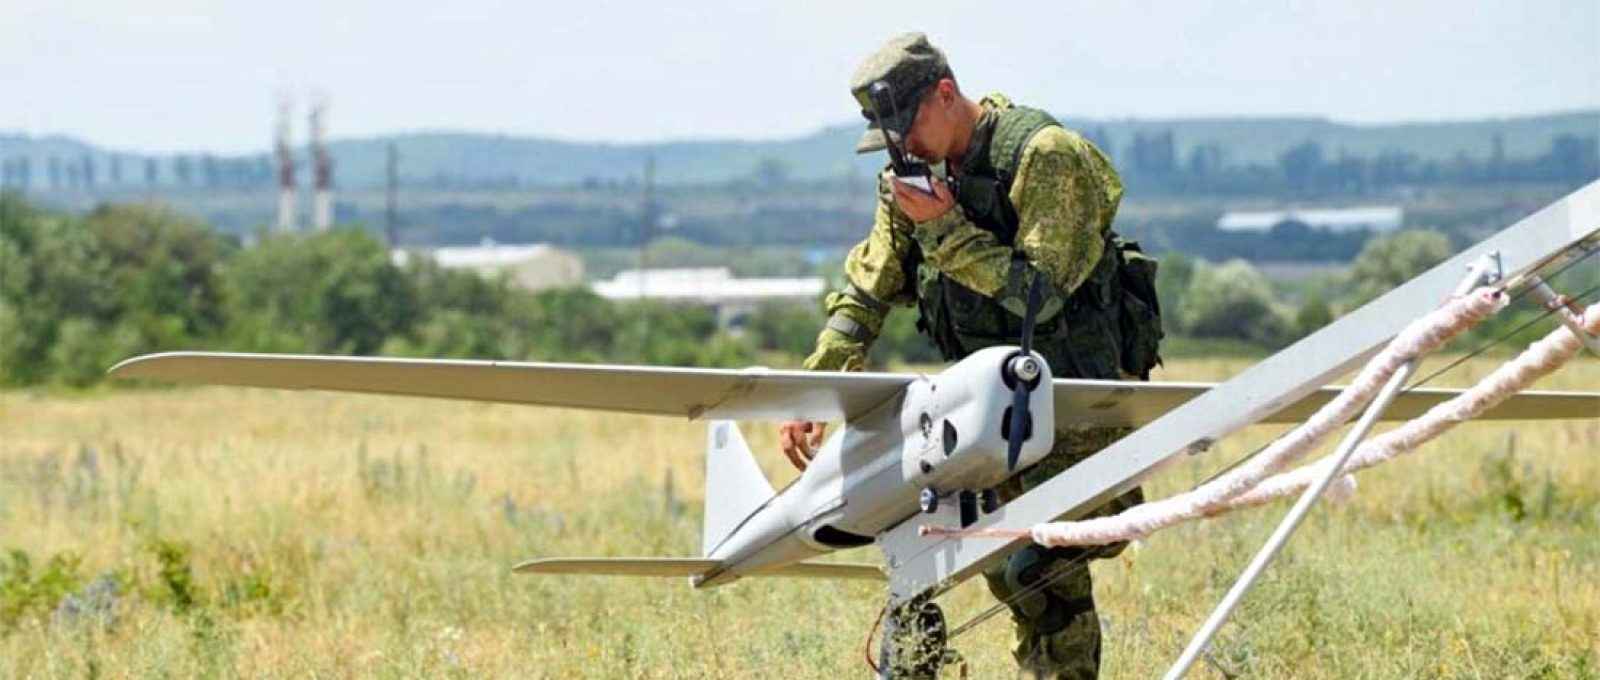 Militar preparando drone Orlan-10 (Andrey Rusov/Ministério de Defesa da Rússia).